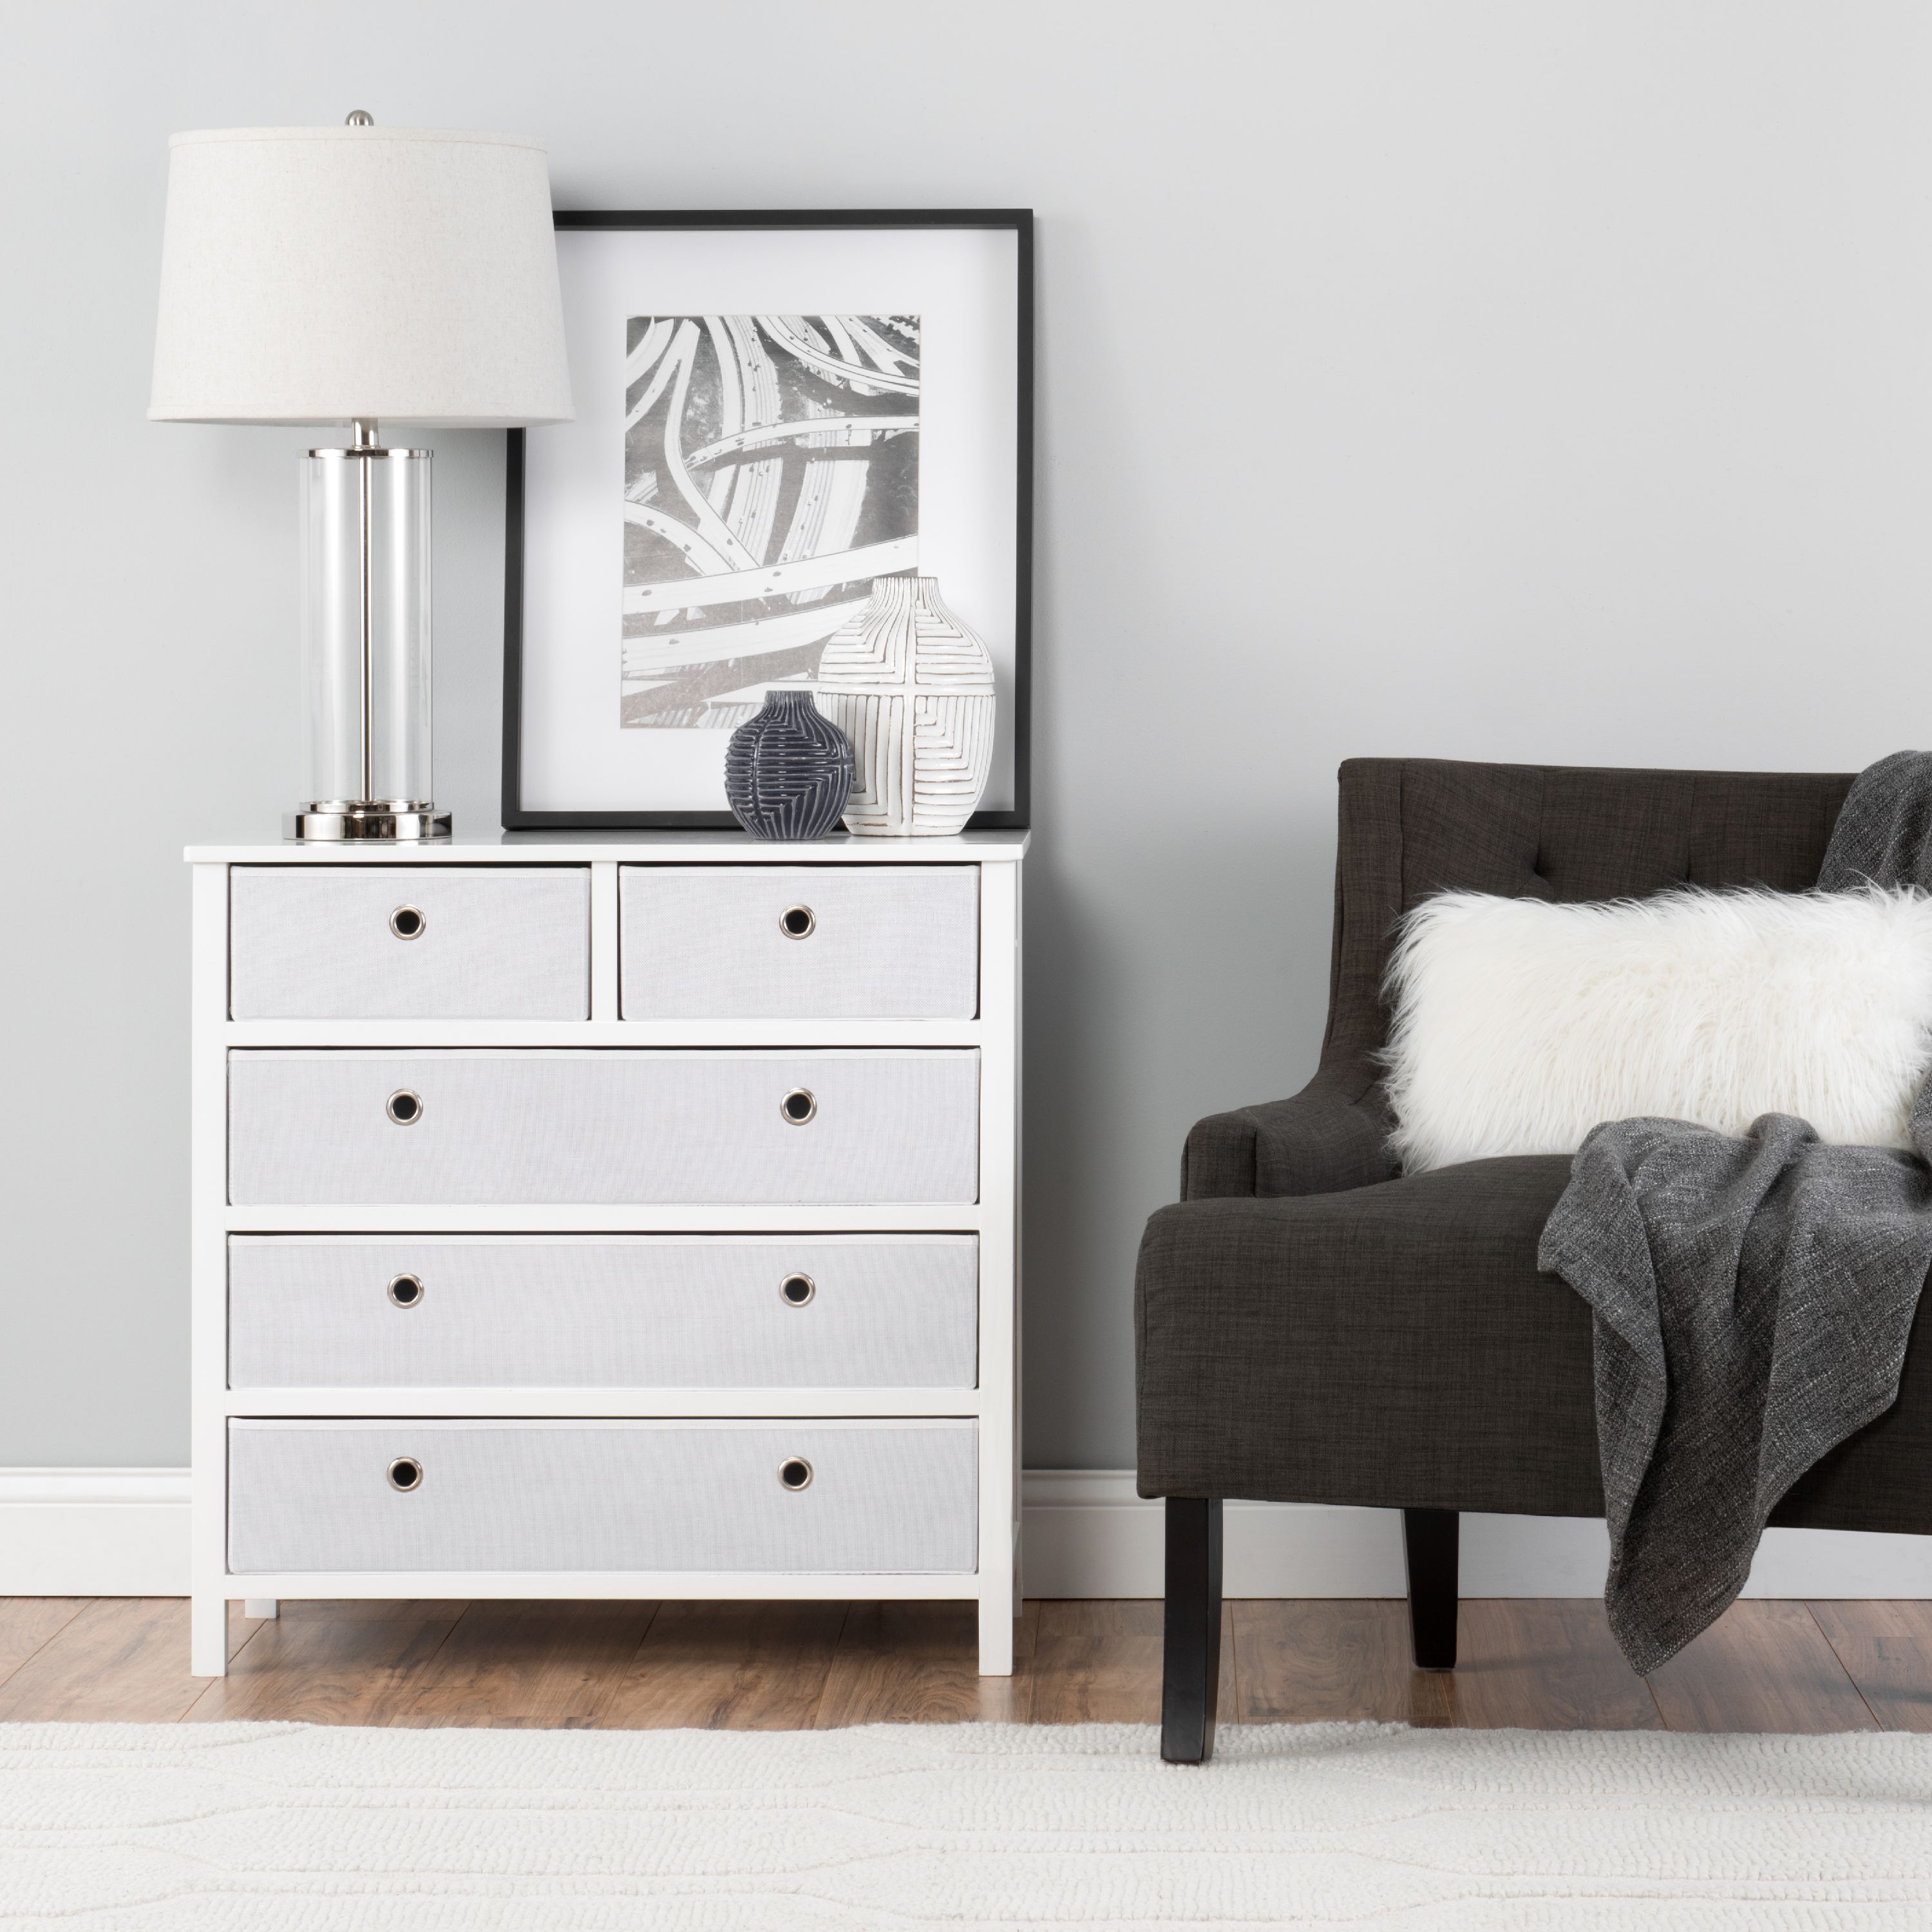 EZ Home Solutions Foldable Furniture Split Drawer Single Dresser 31 x 31 x 19 - White - image 1 of 7